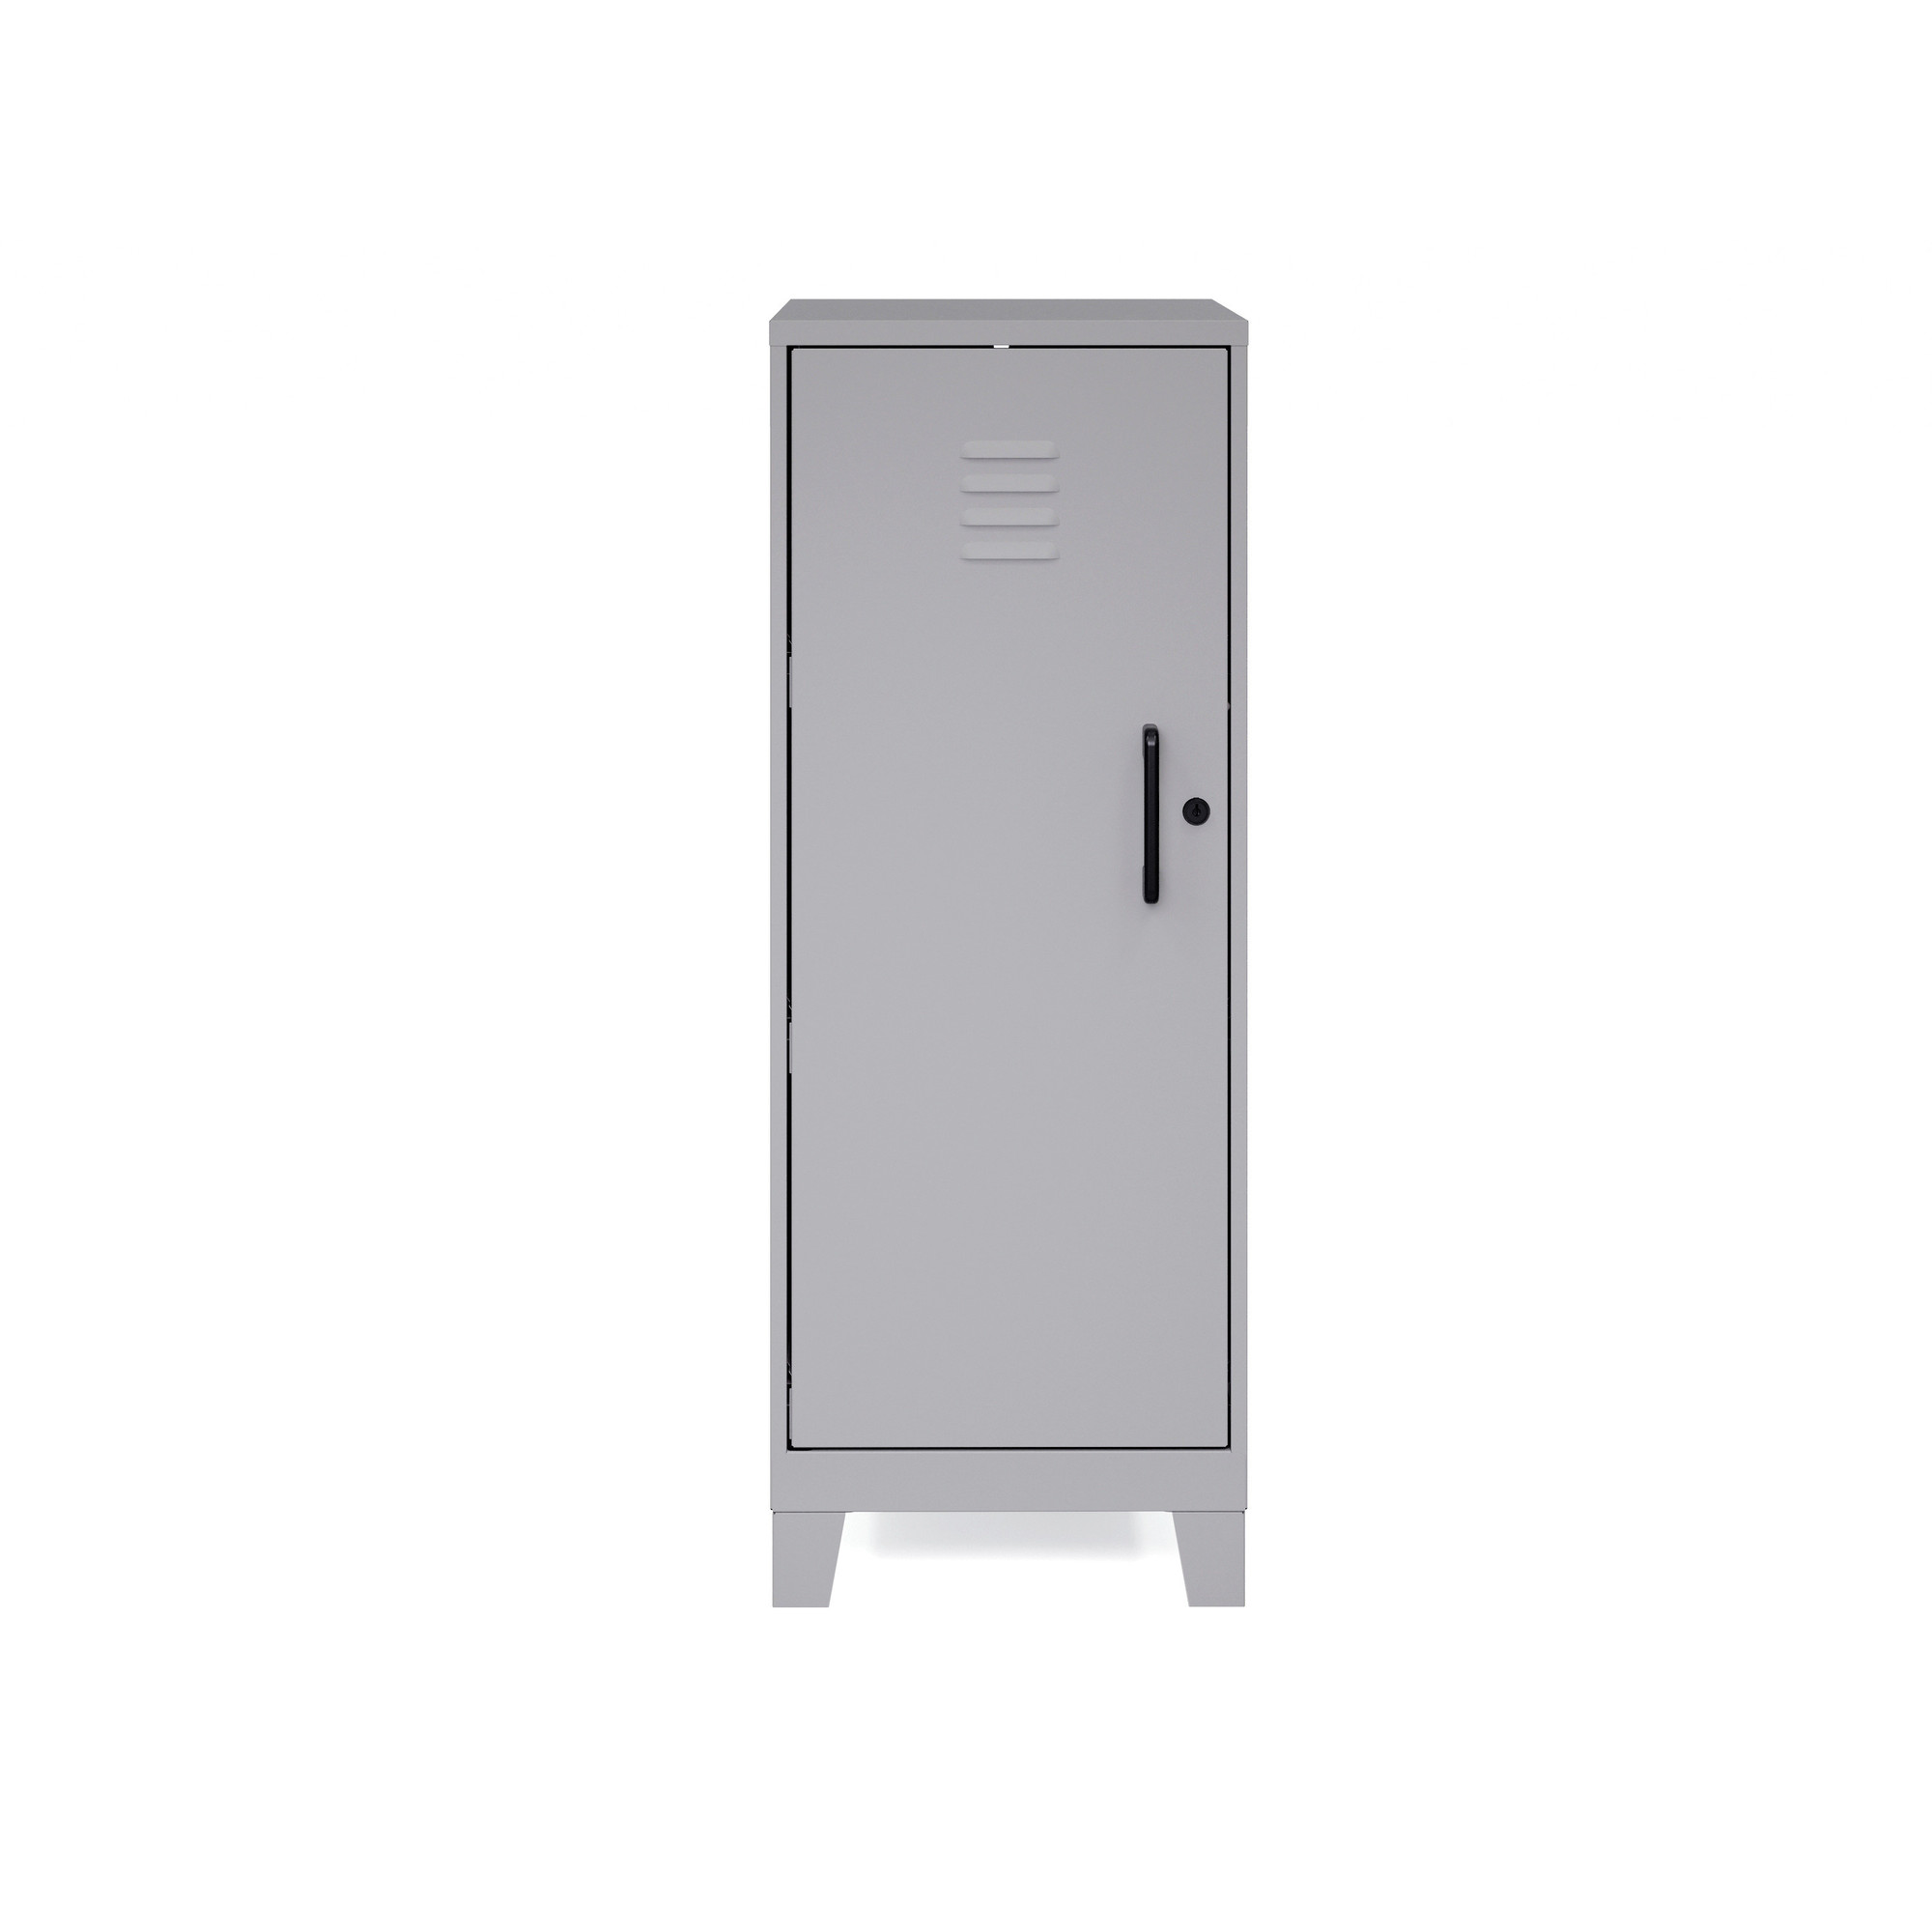 Hirsh Industries, 3 Shelf Storage Locker Cabinet, Height 38.5 in, Width 14.25 in, Color Silver, Model 25224